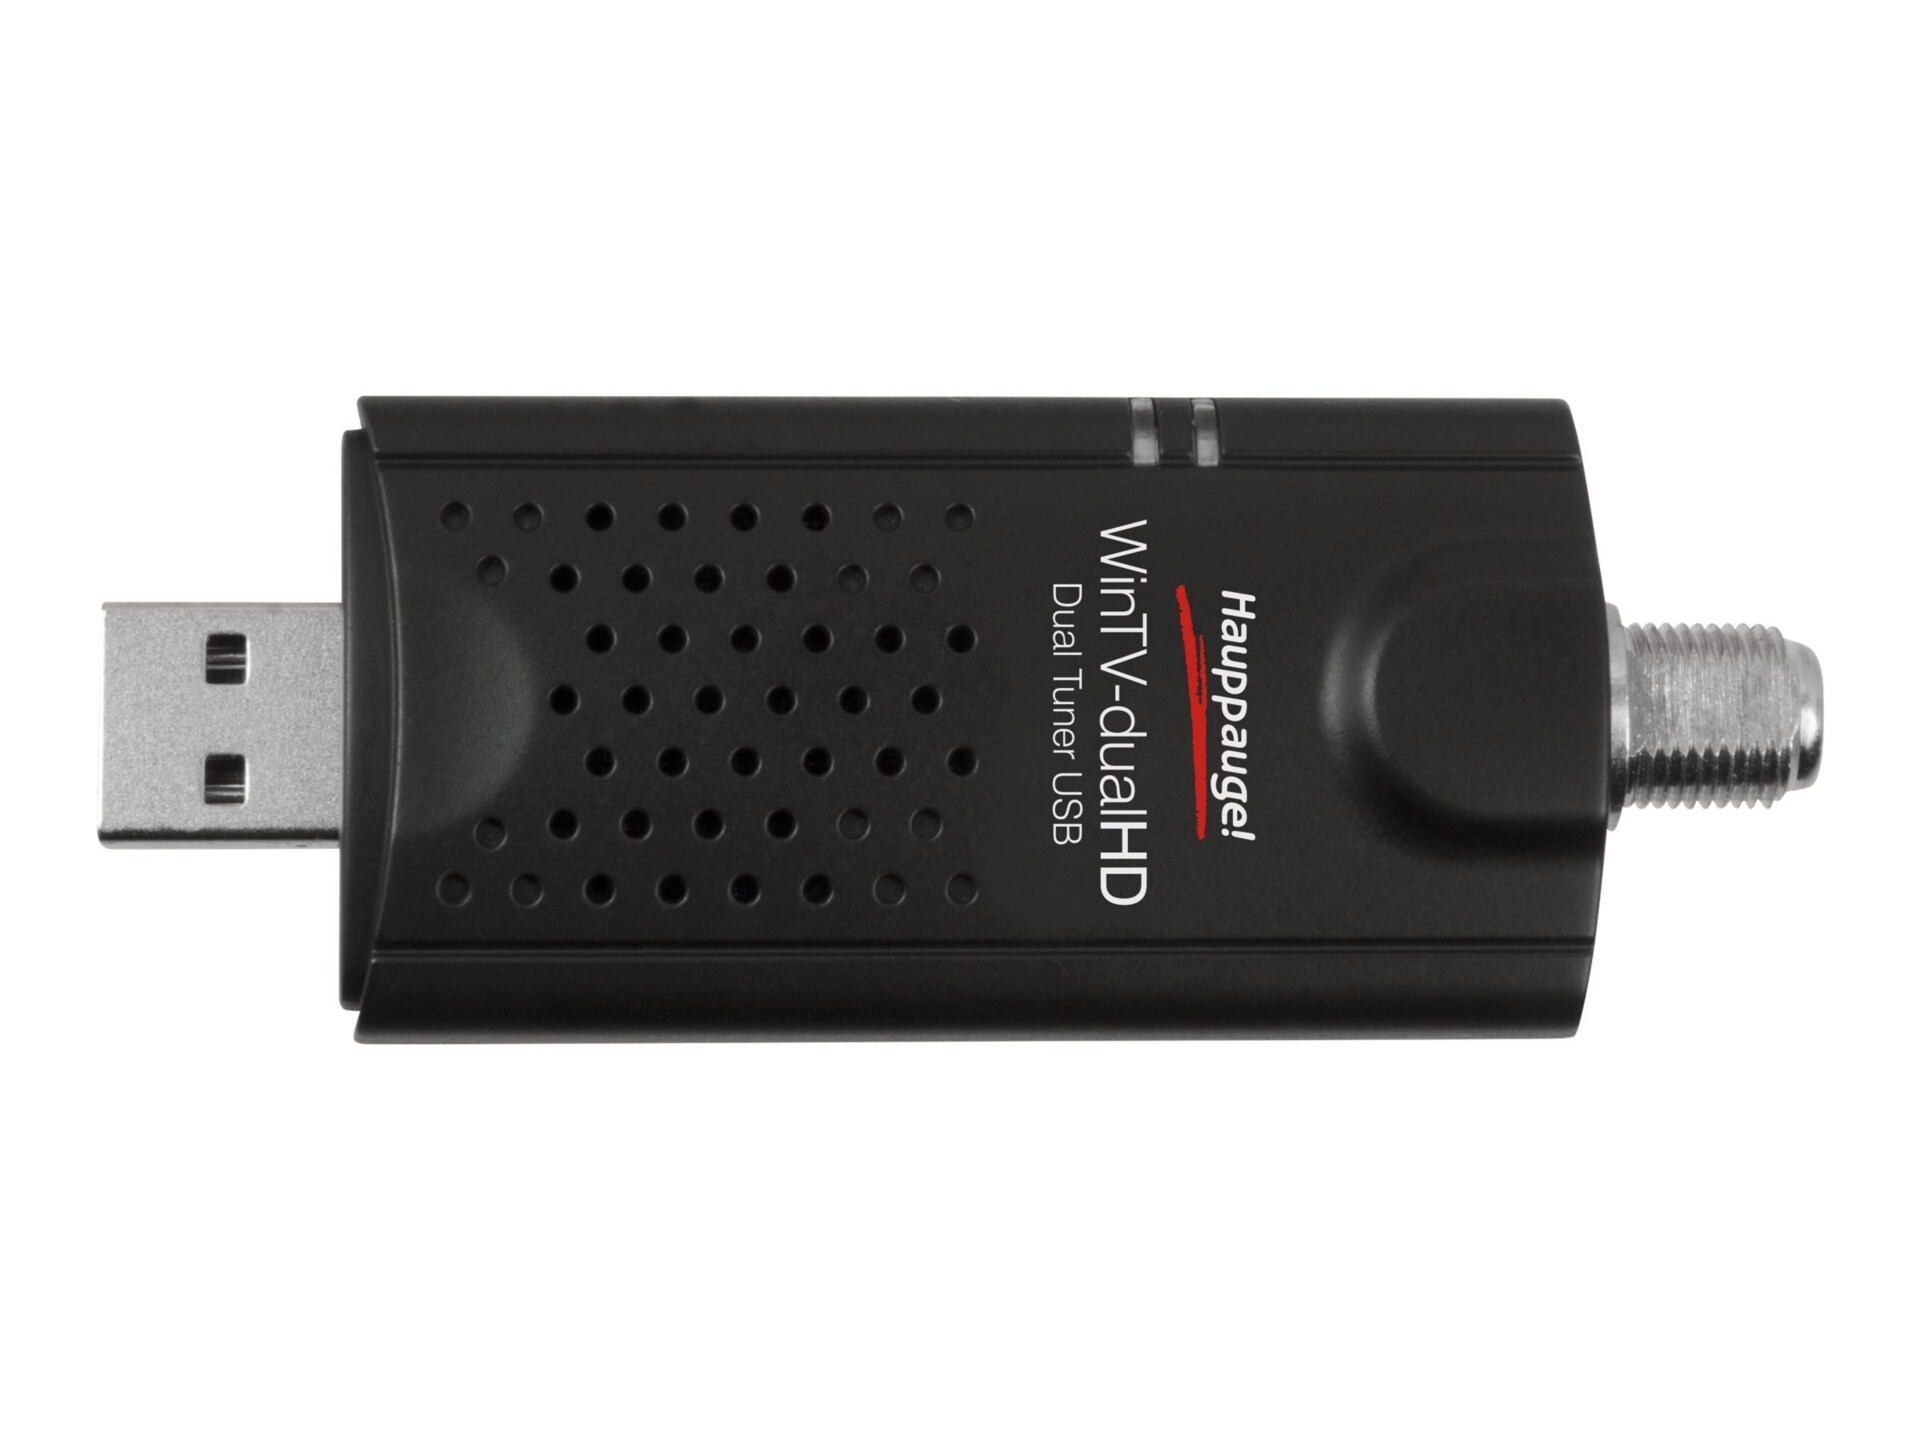 Hauppauge WinTV dualHD - digital TV tuner - USB 2.0